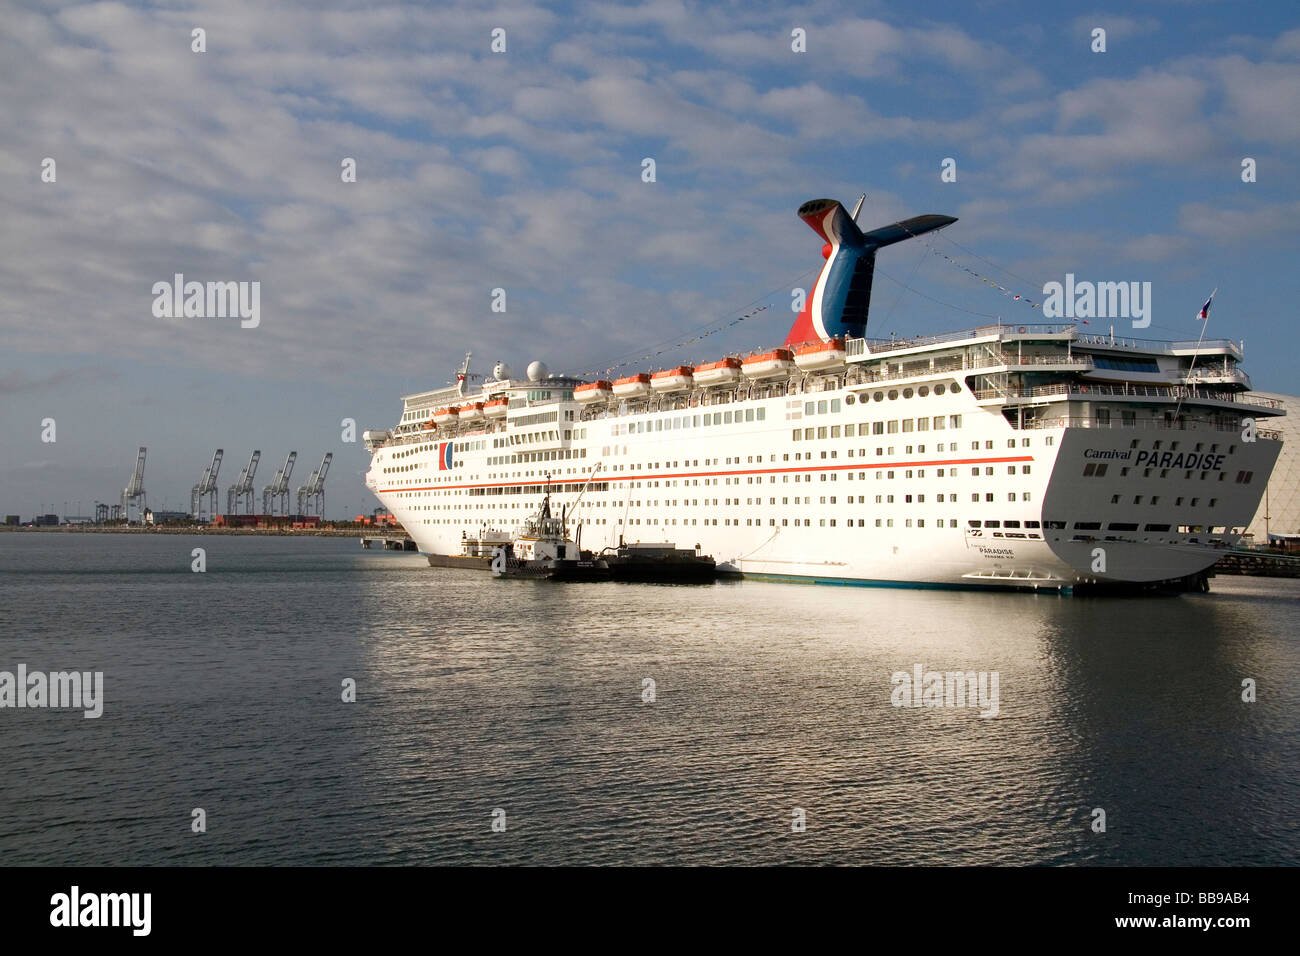 Carnival Paradise cruise ship docked at Long Beach California USA Stock Photo